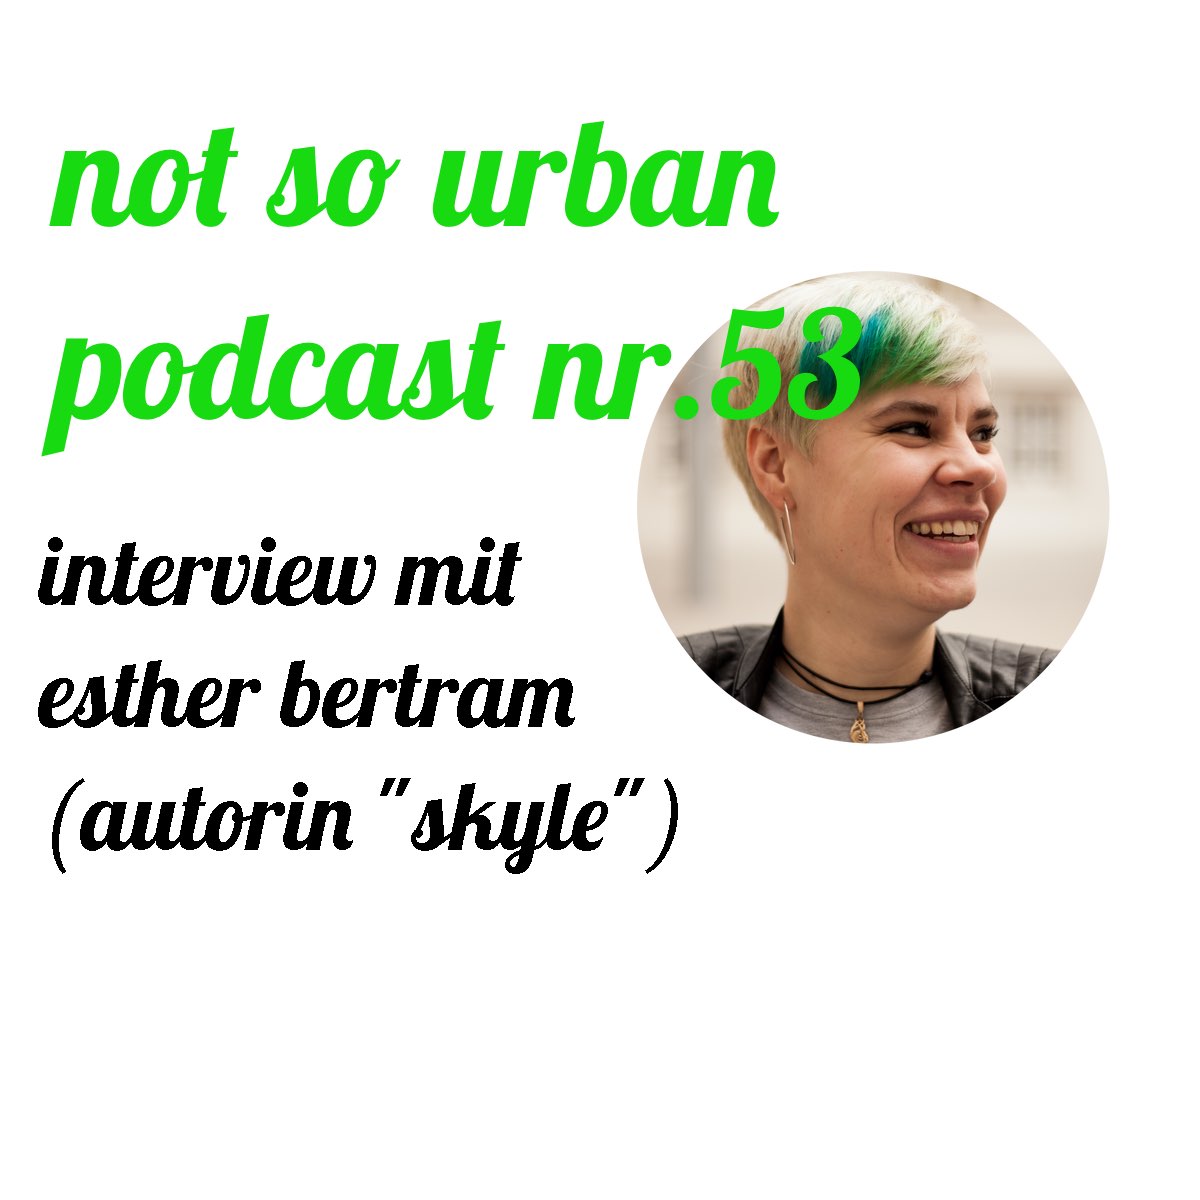 not so urban Podcast Nr.53: Interview mit Esther Bertram, Interviewer: Andreas Allgeyer (Coverbild)